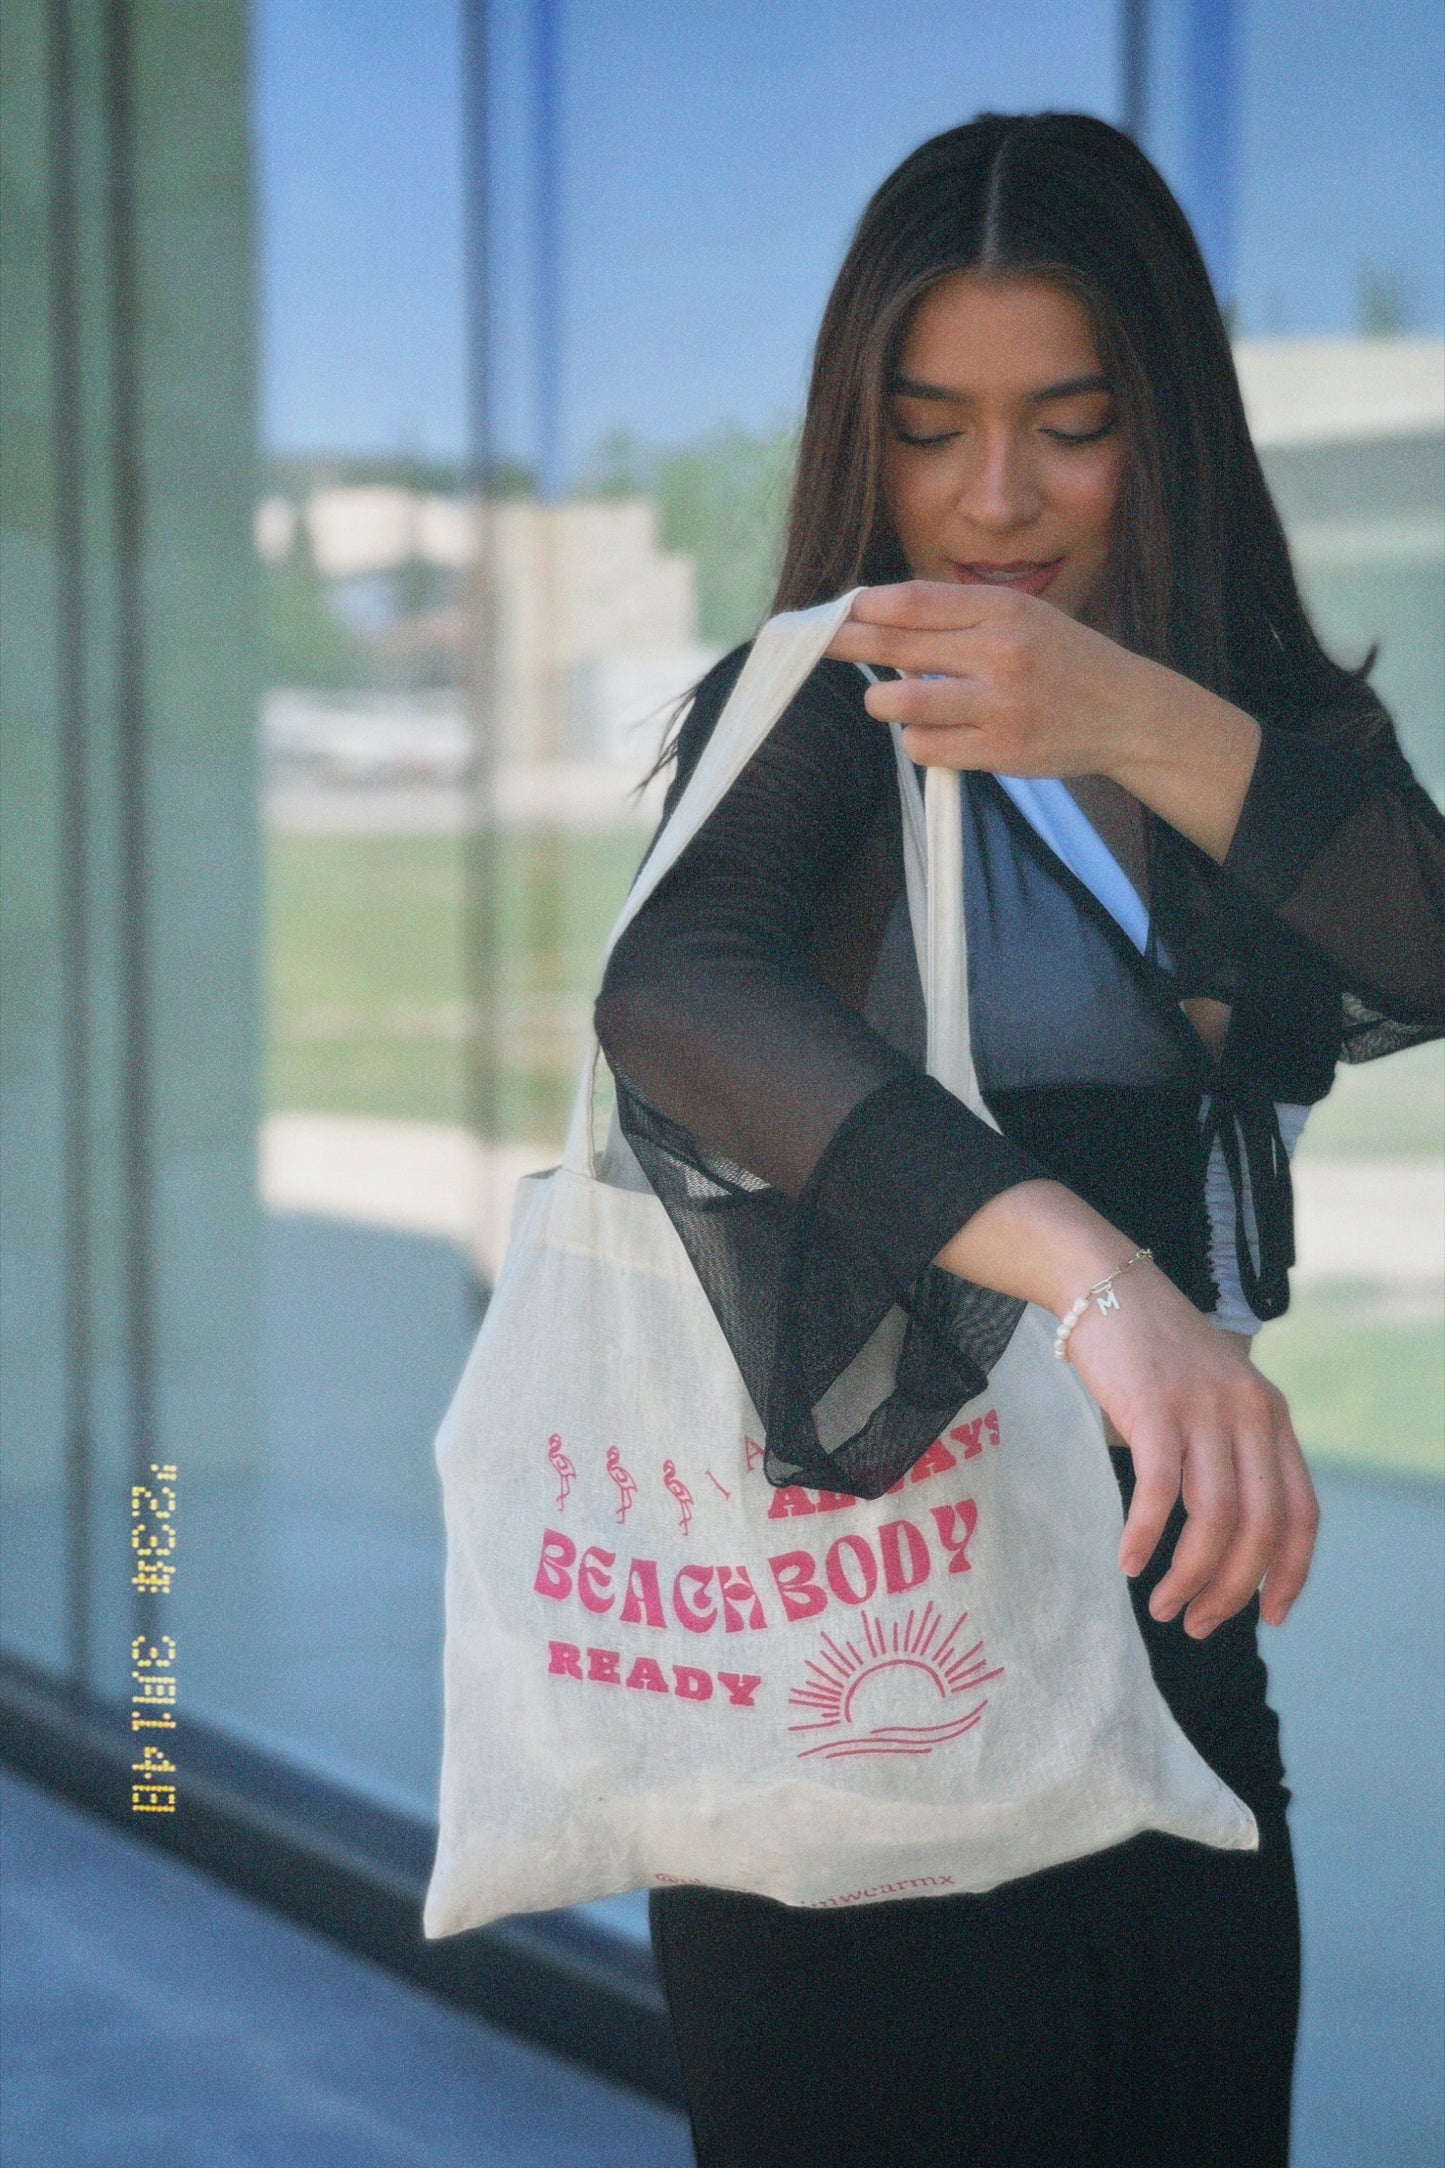 "I AM BEACH BODY READY" Okana Tote Bag